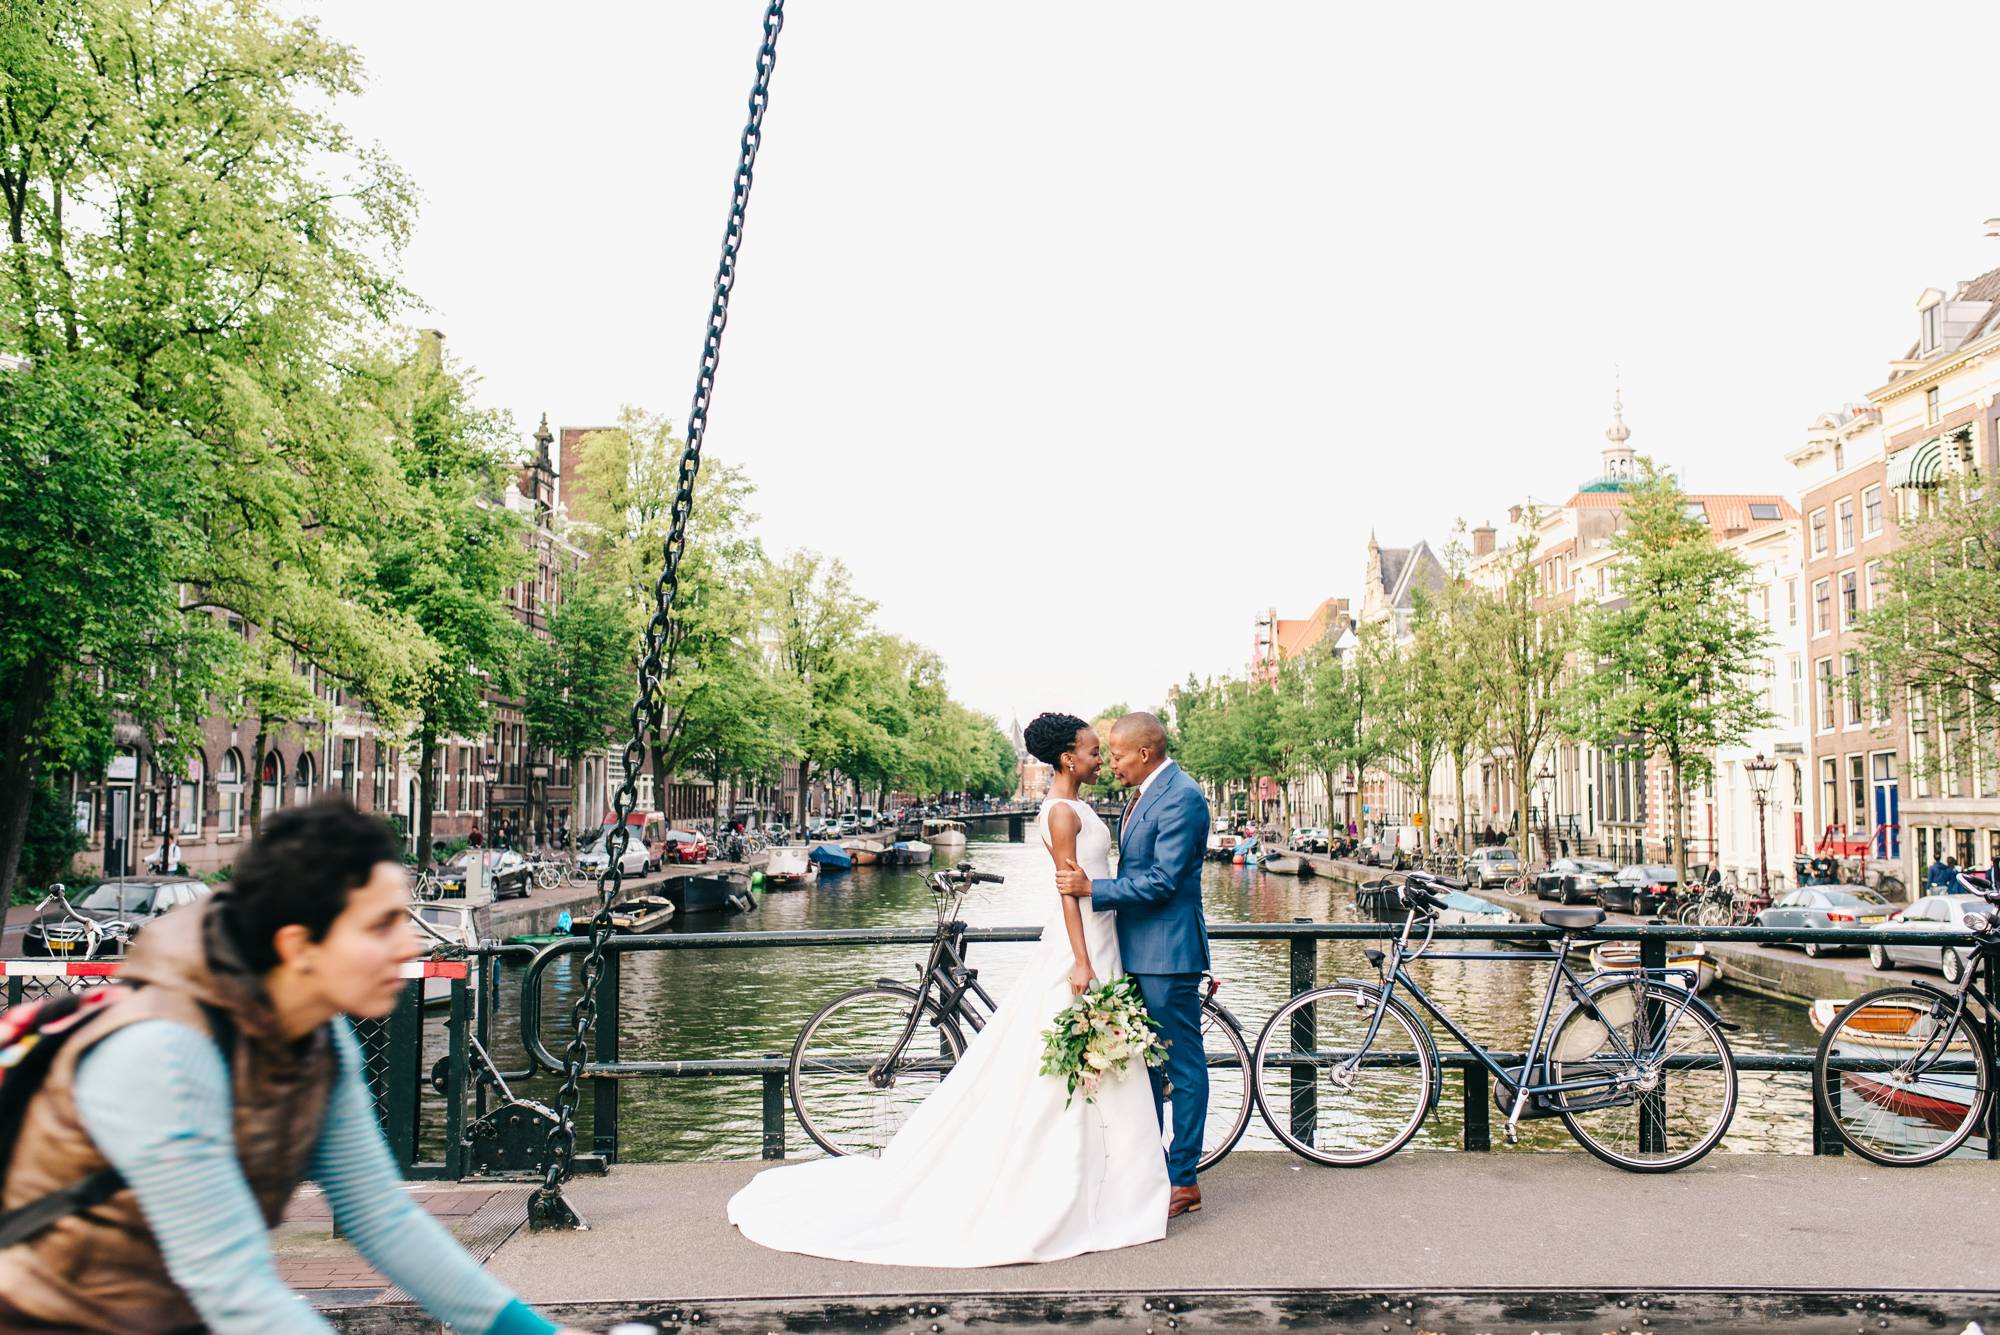 Wedding photographer elopement in amsterdam - Wedding shoot in Amsterdam